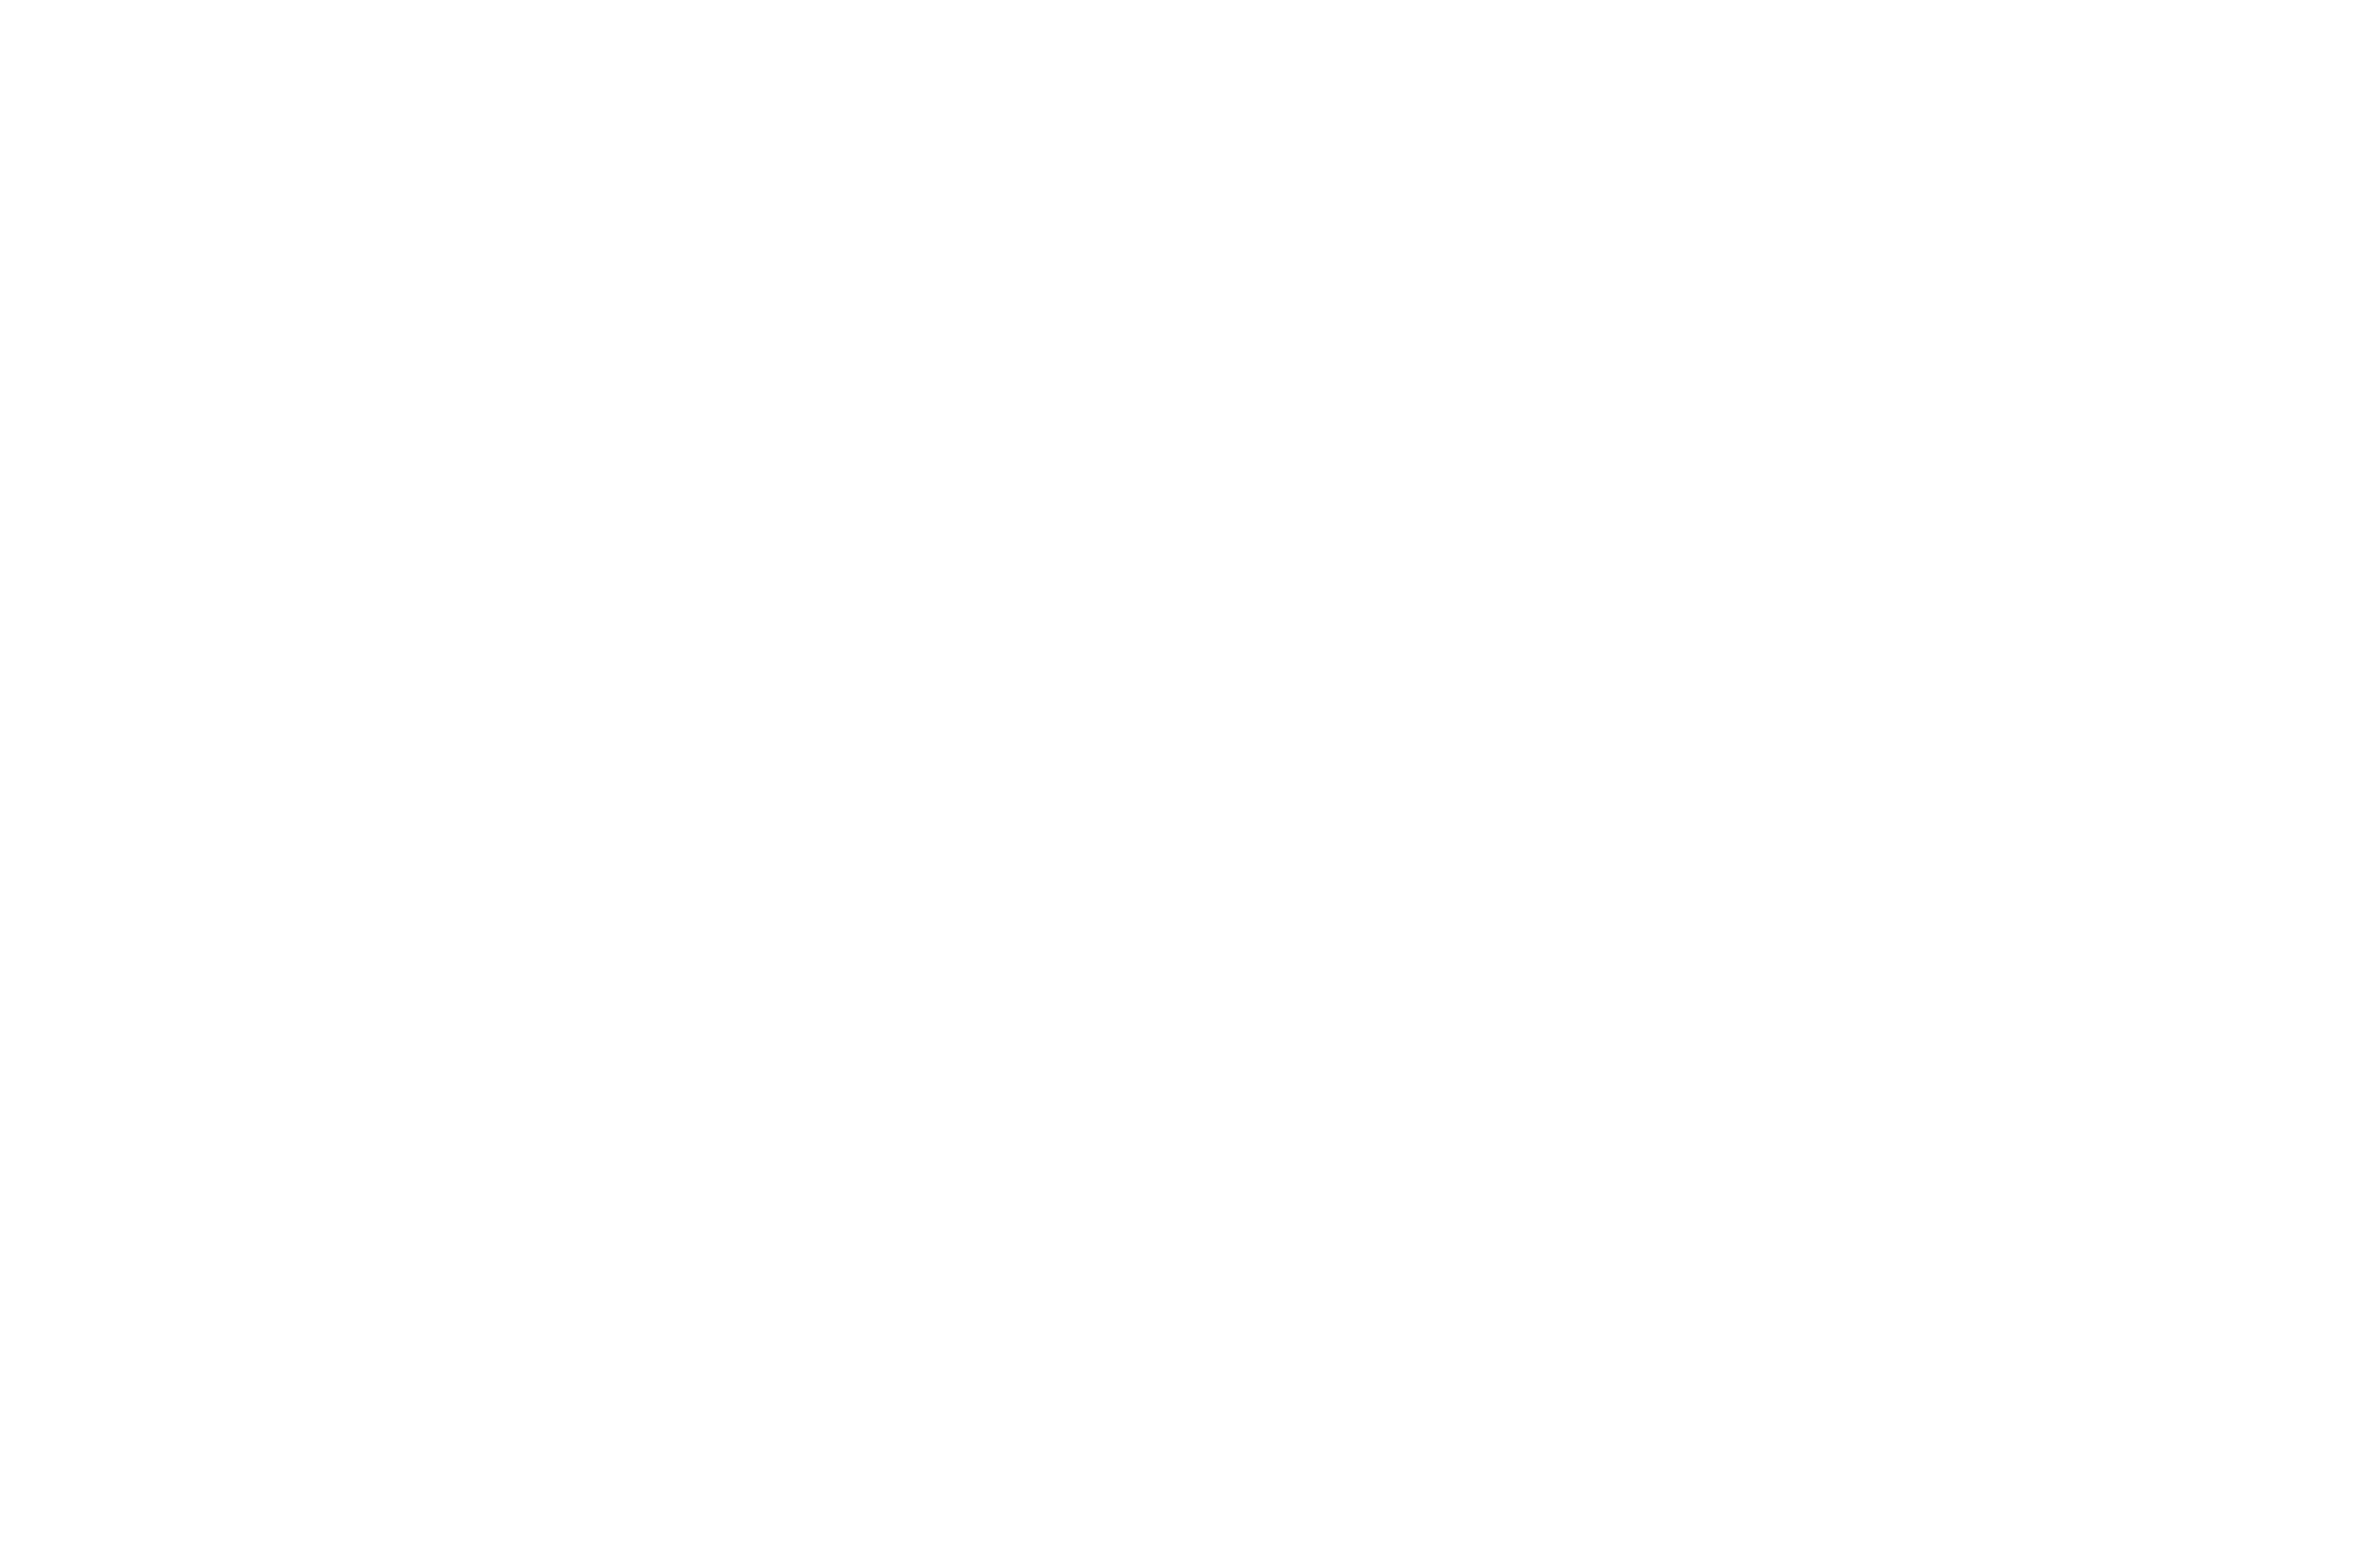 OfficialSelection-Saint-PetersburgInternationalFilmFestivalSPIFFWorldCupofGenreCinema-2022.png